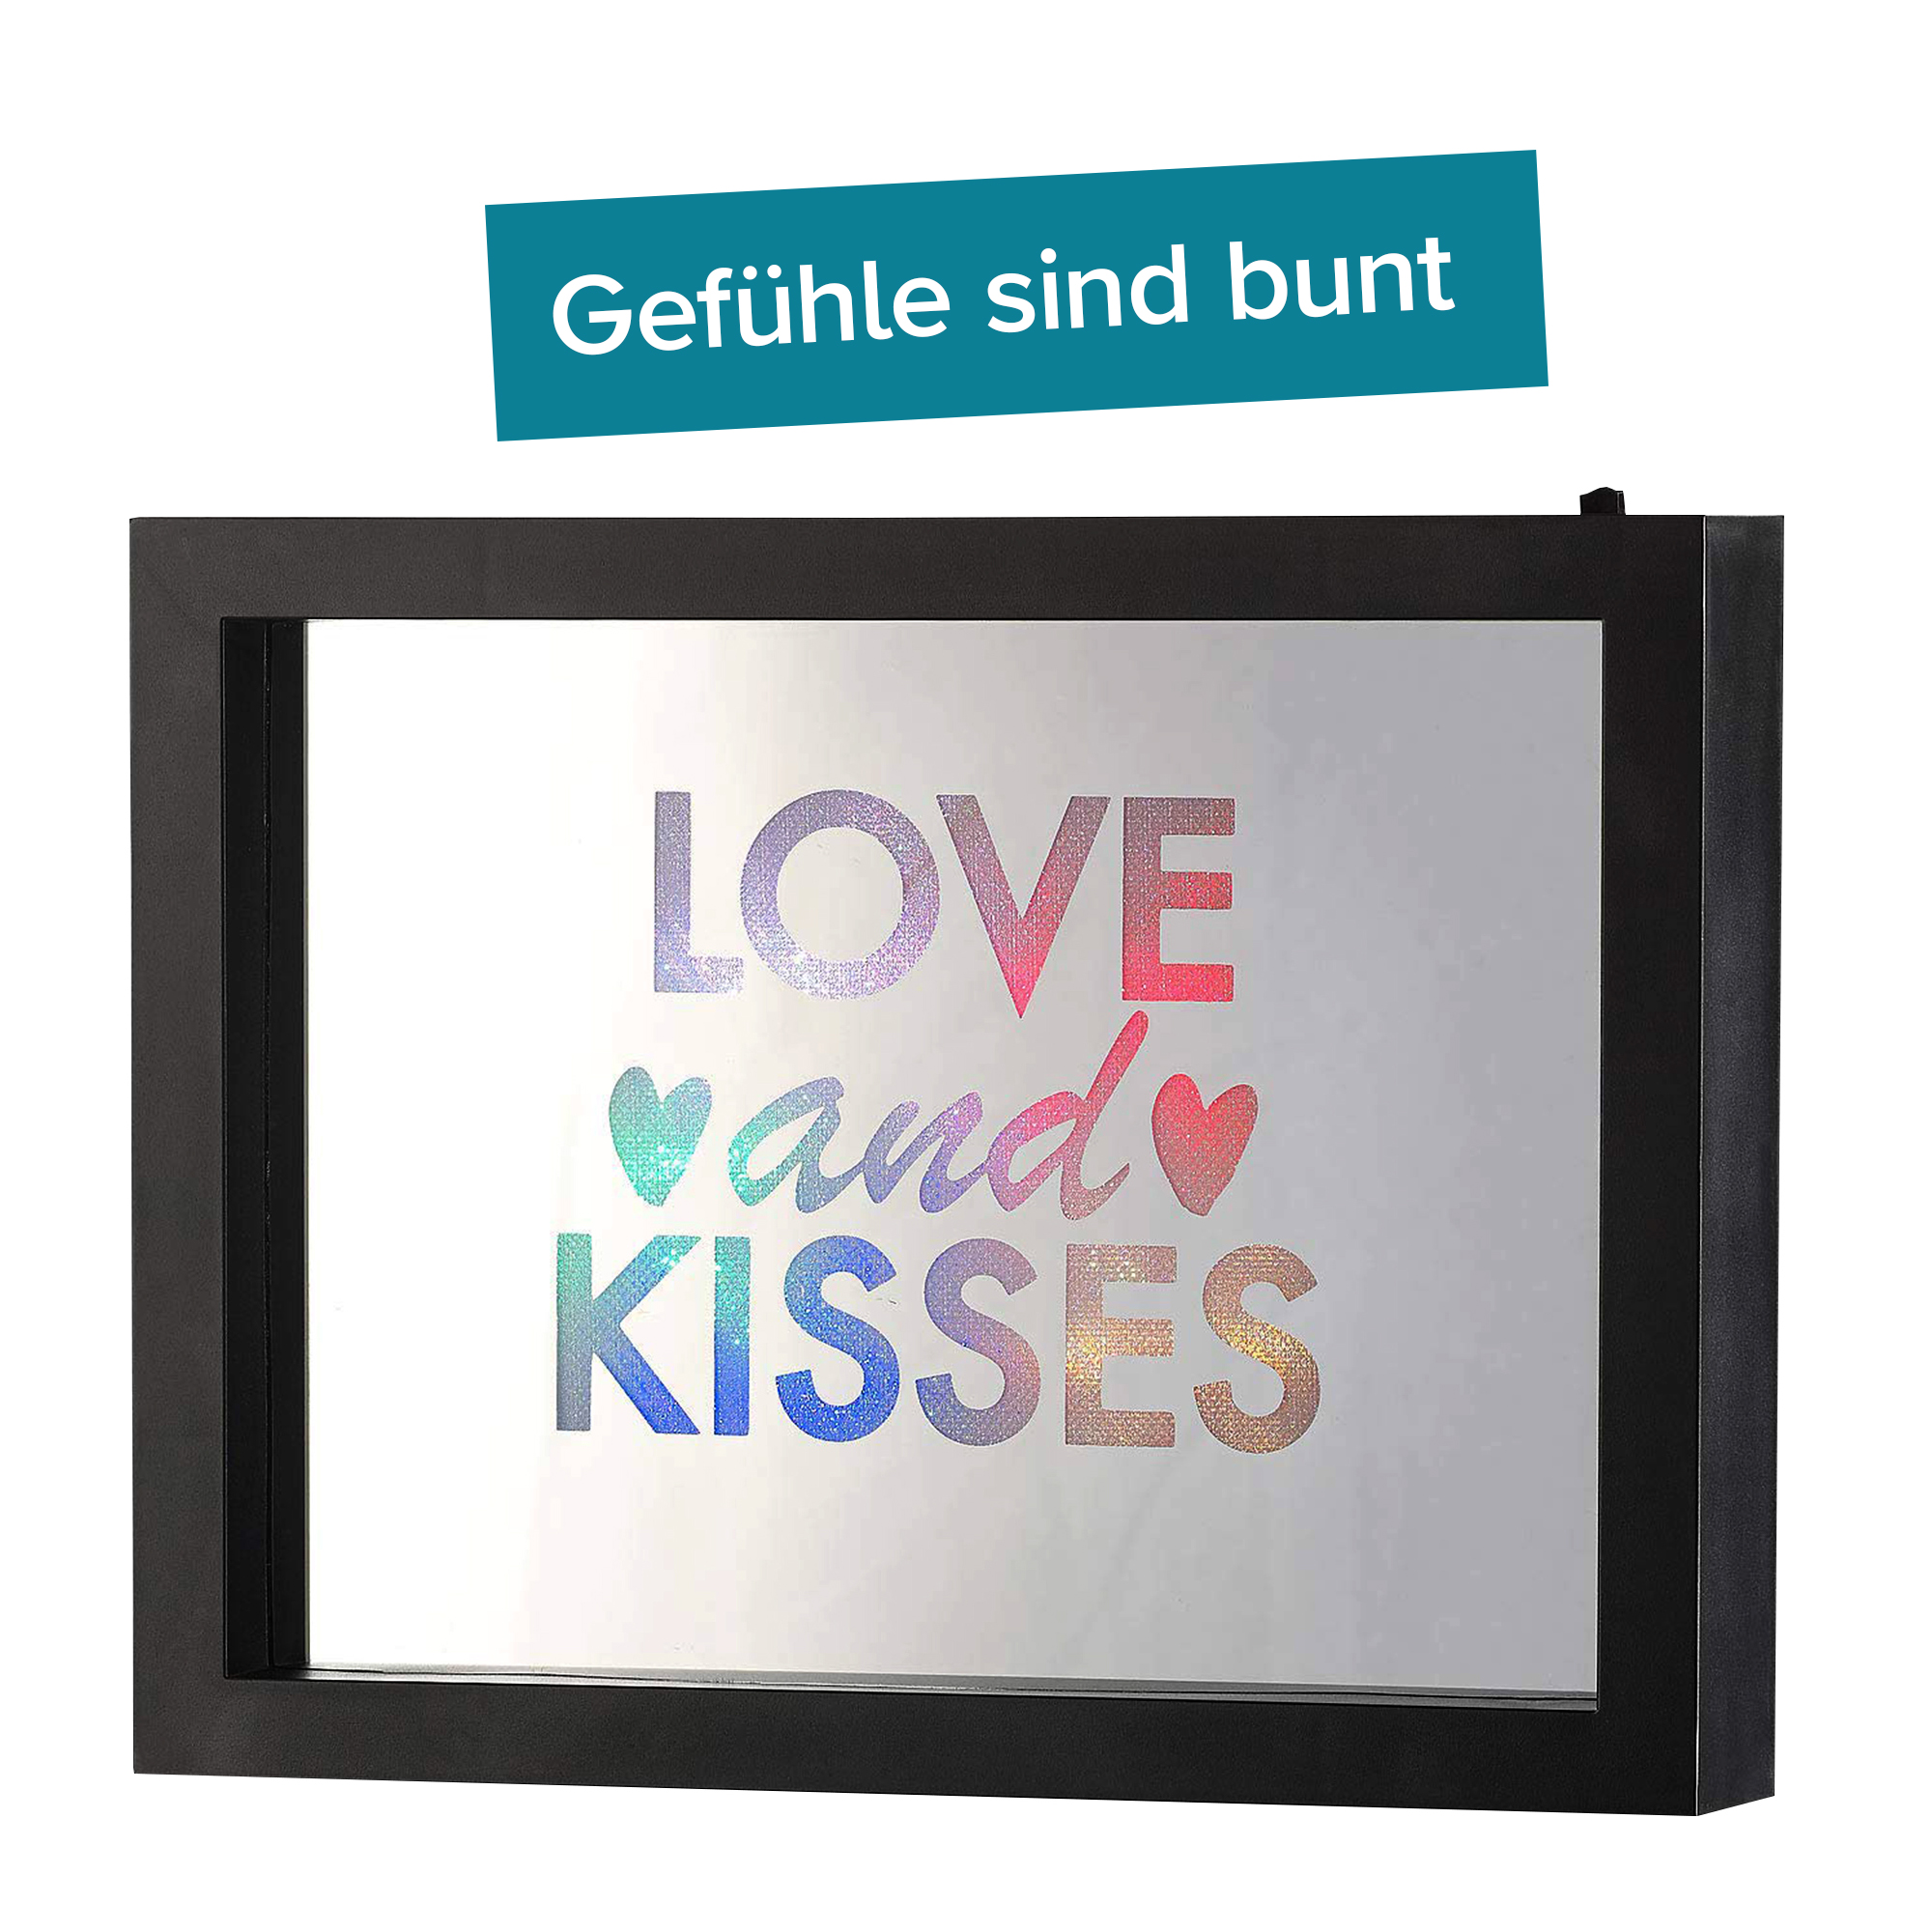 LED Rahmen mit Farbwechsel - Love And Kisses 4065 - 6